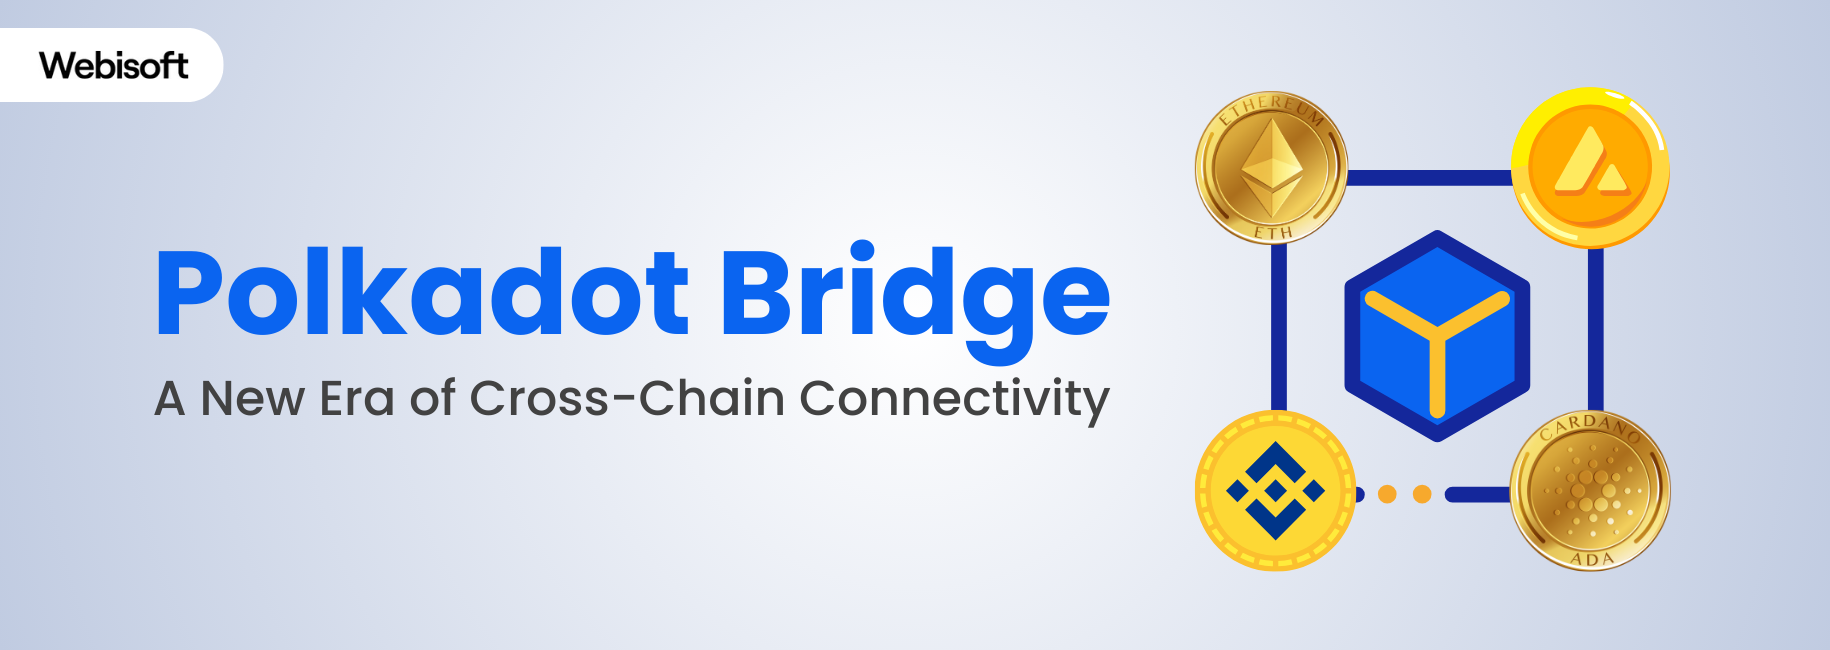 Polkadot Bridge: A New Era of Cross-Chain Connectivity